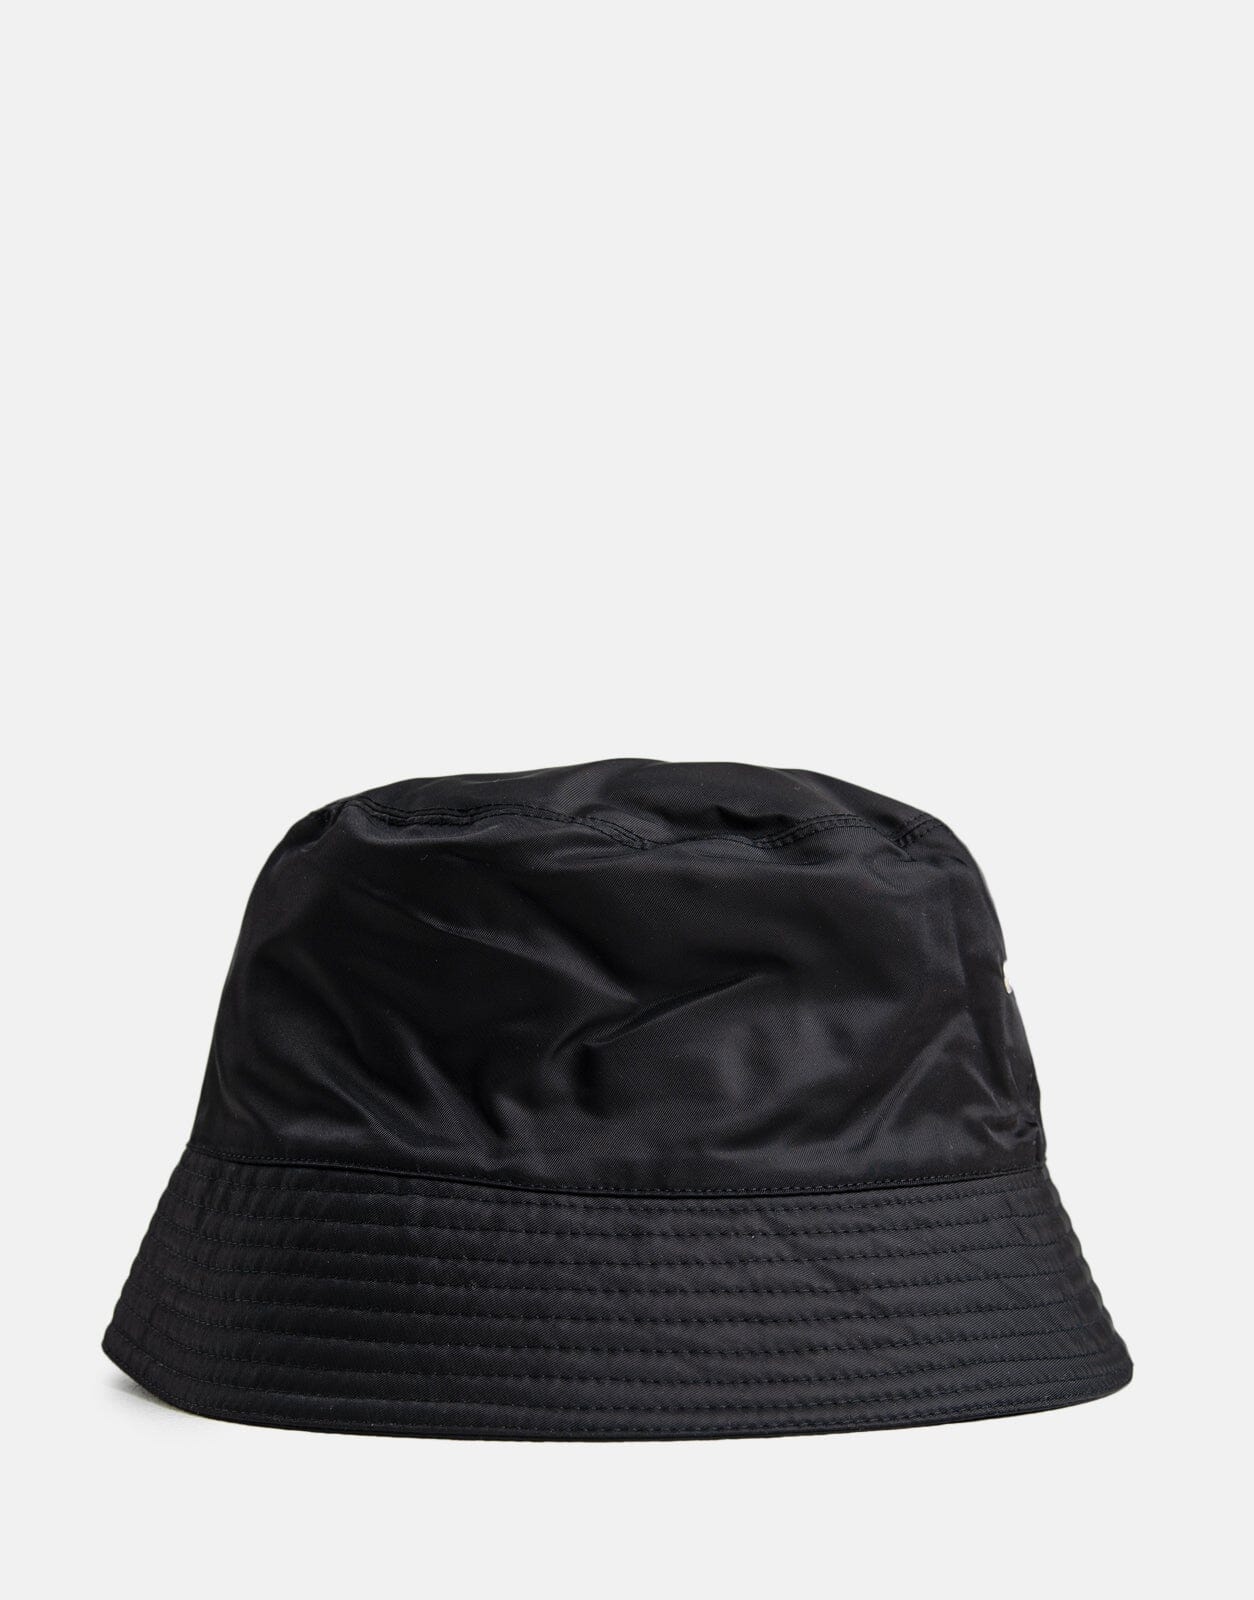 Replay Black Bucket Hat - Subwear